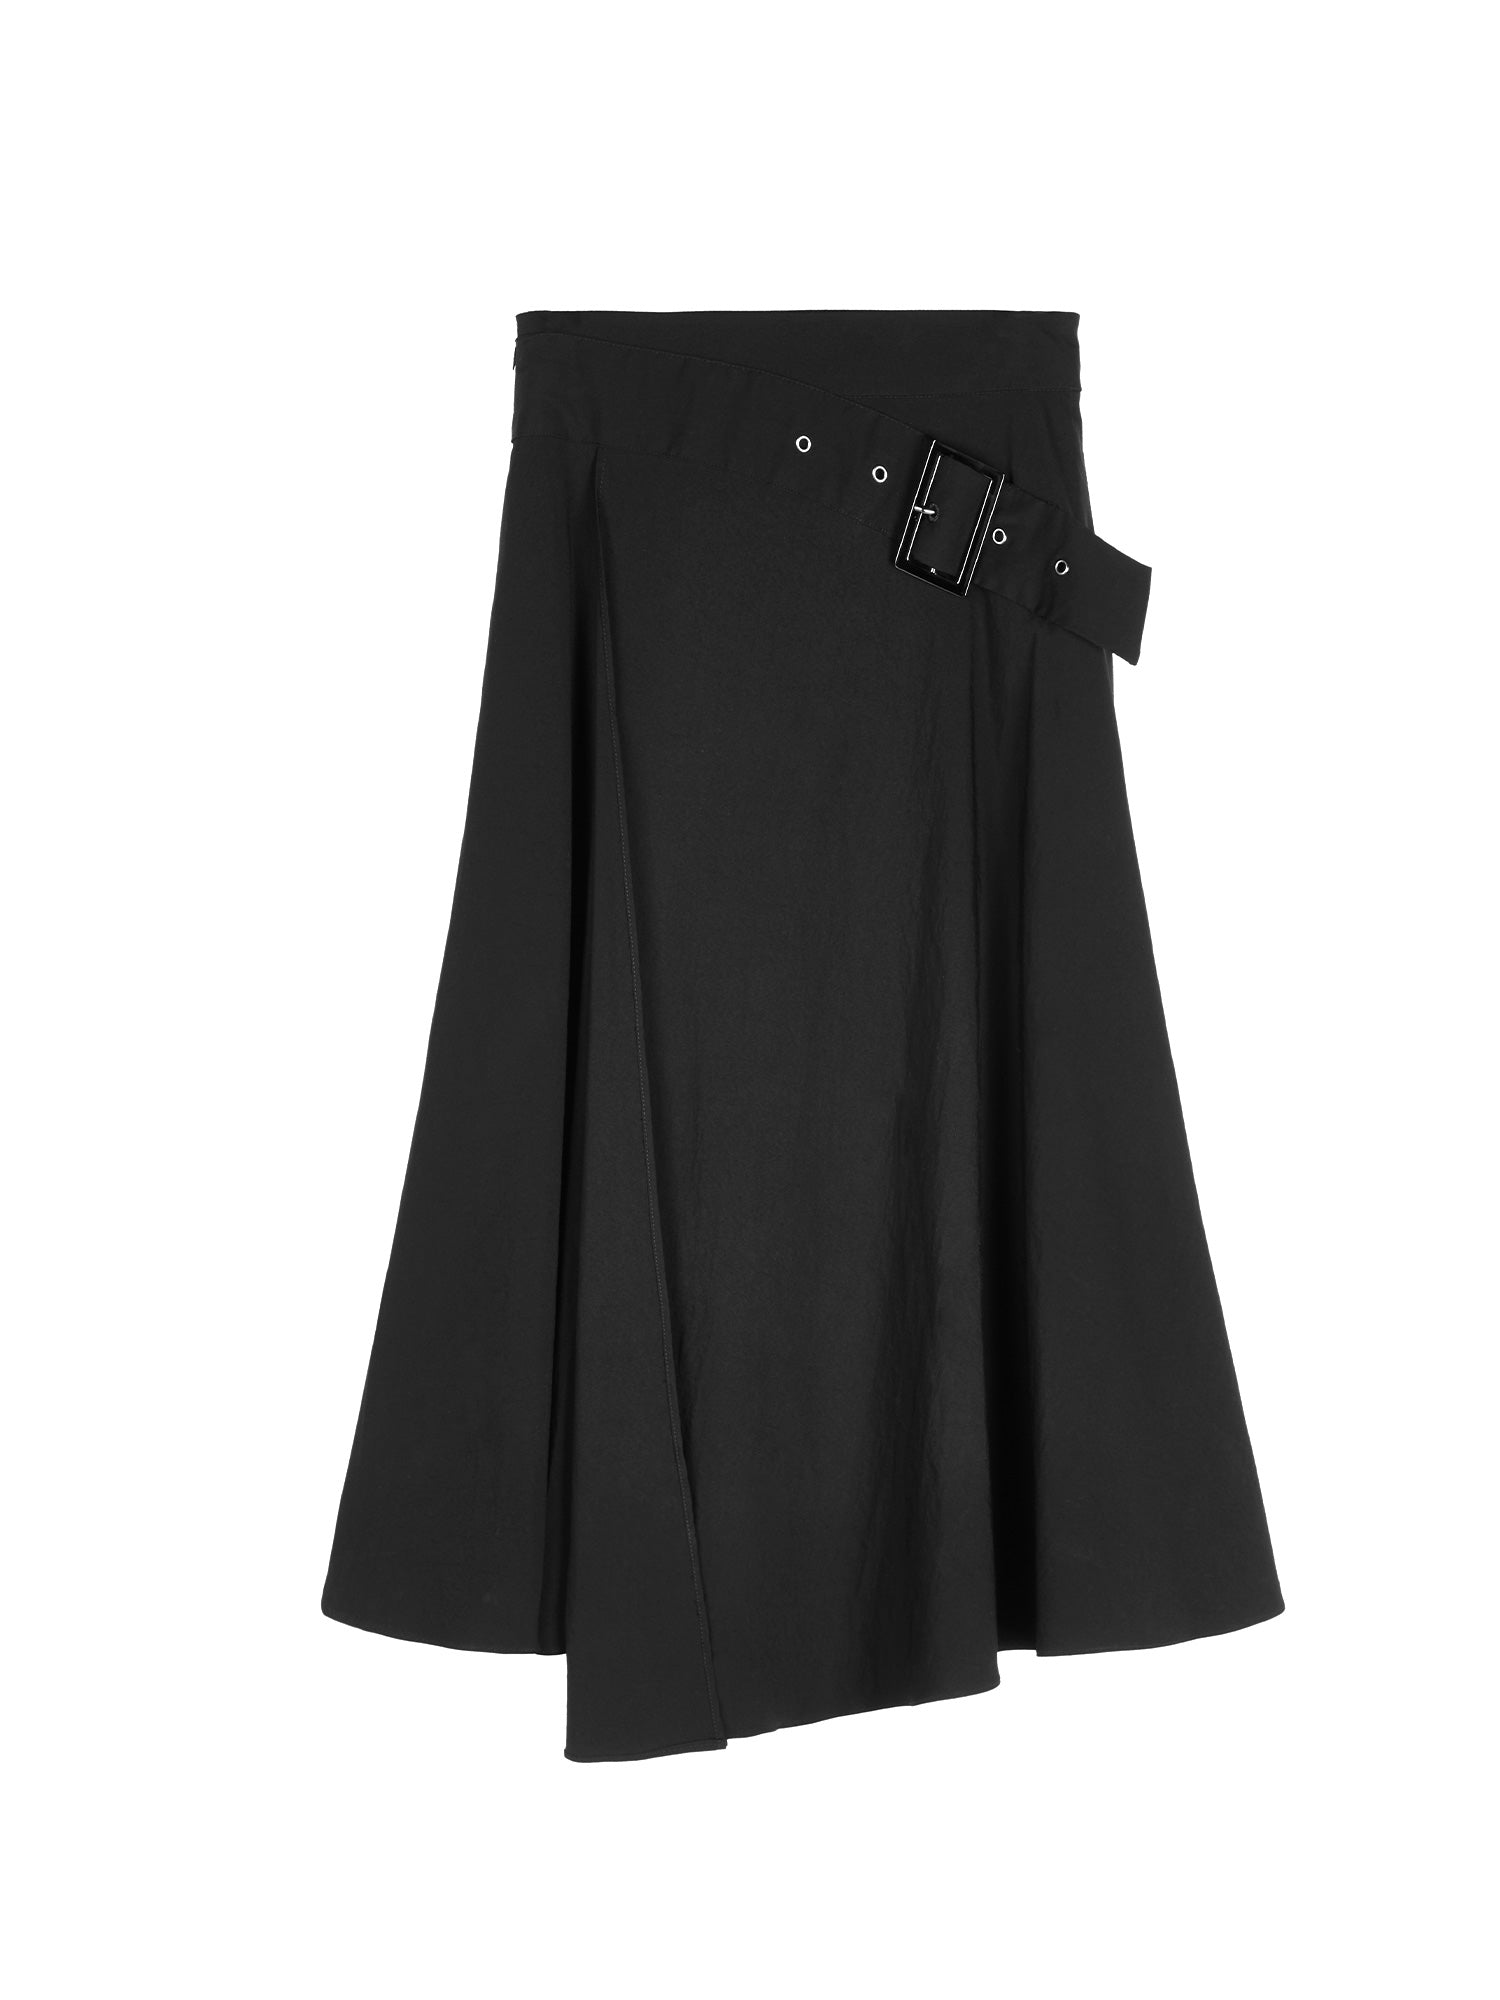 Recommendations for unique design trendy women's skirt